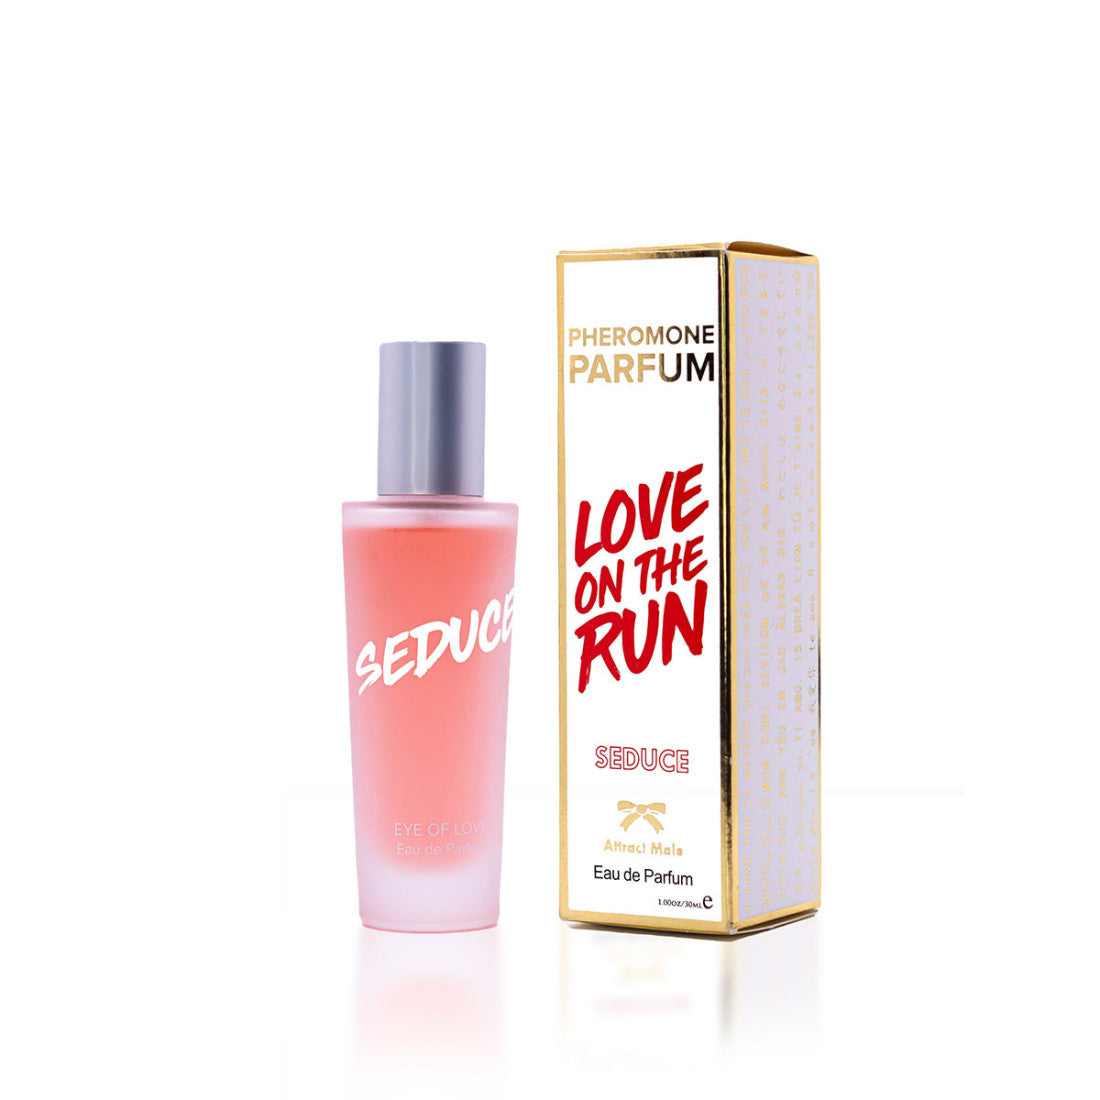 Eye of Love - Love on the Run Pheromone Parfum 30ml - Seduce (F to M)